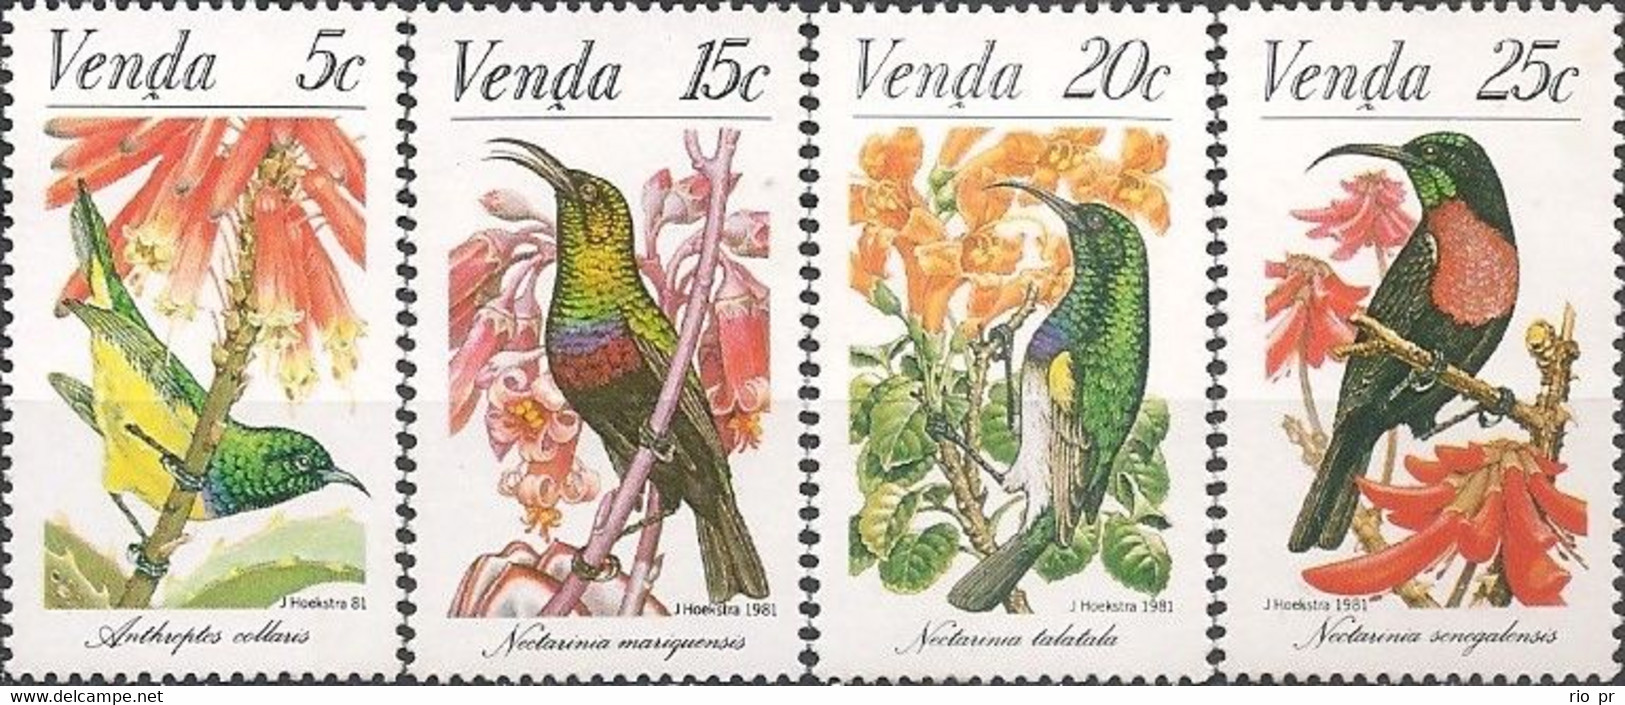 VENDA - COMPLETE SET HUMMINGBIRDS 1981 - MNH - Kolibries